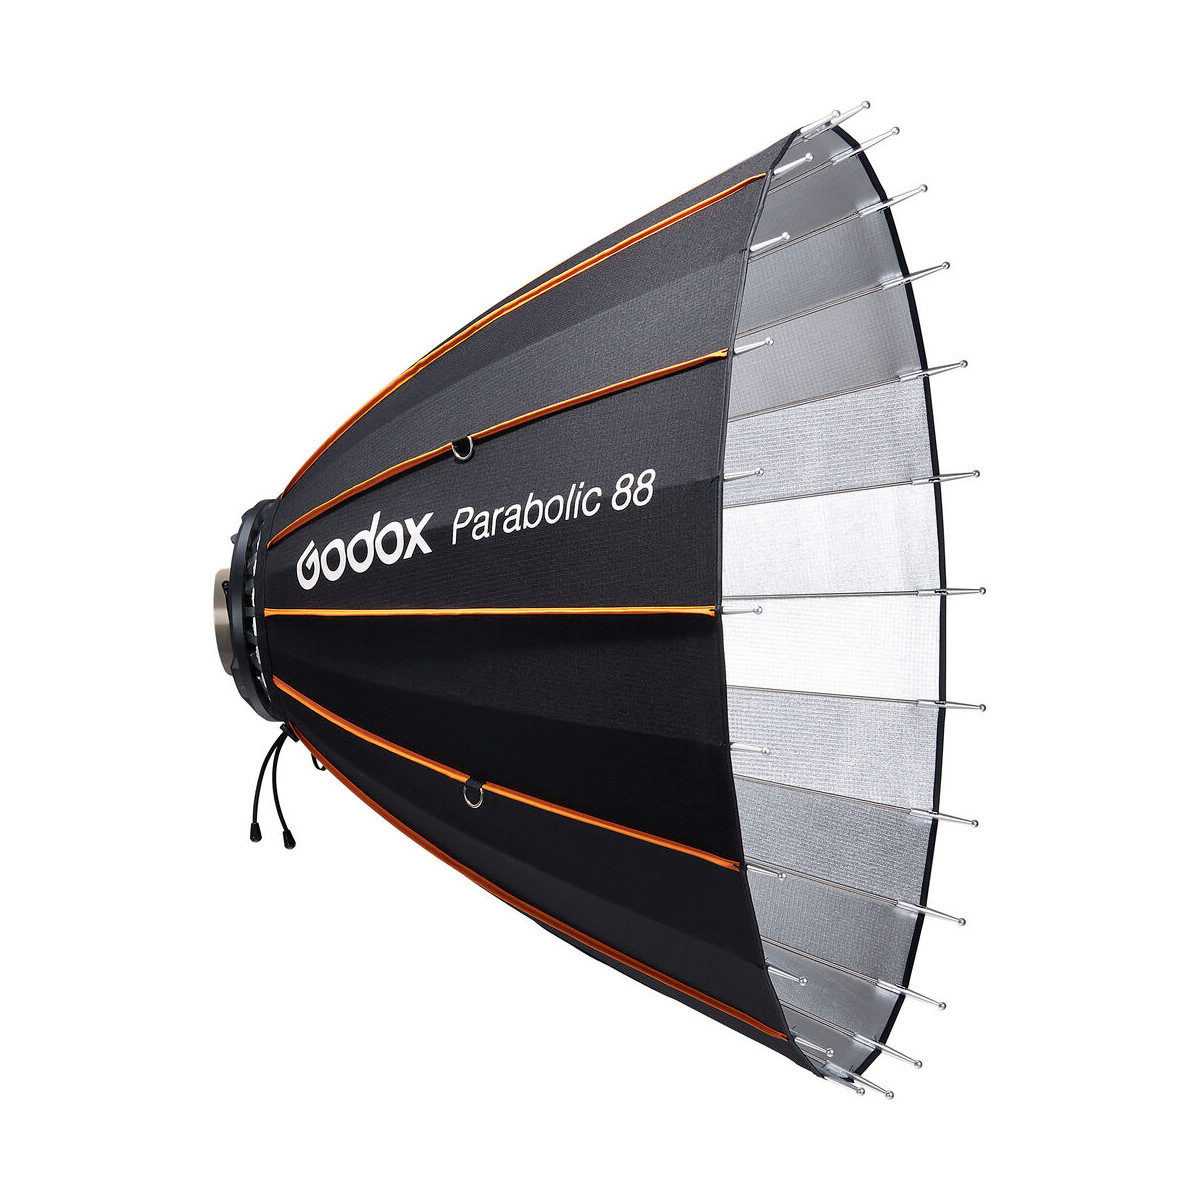 Godox Parabolic88 Reflector